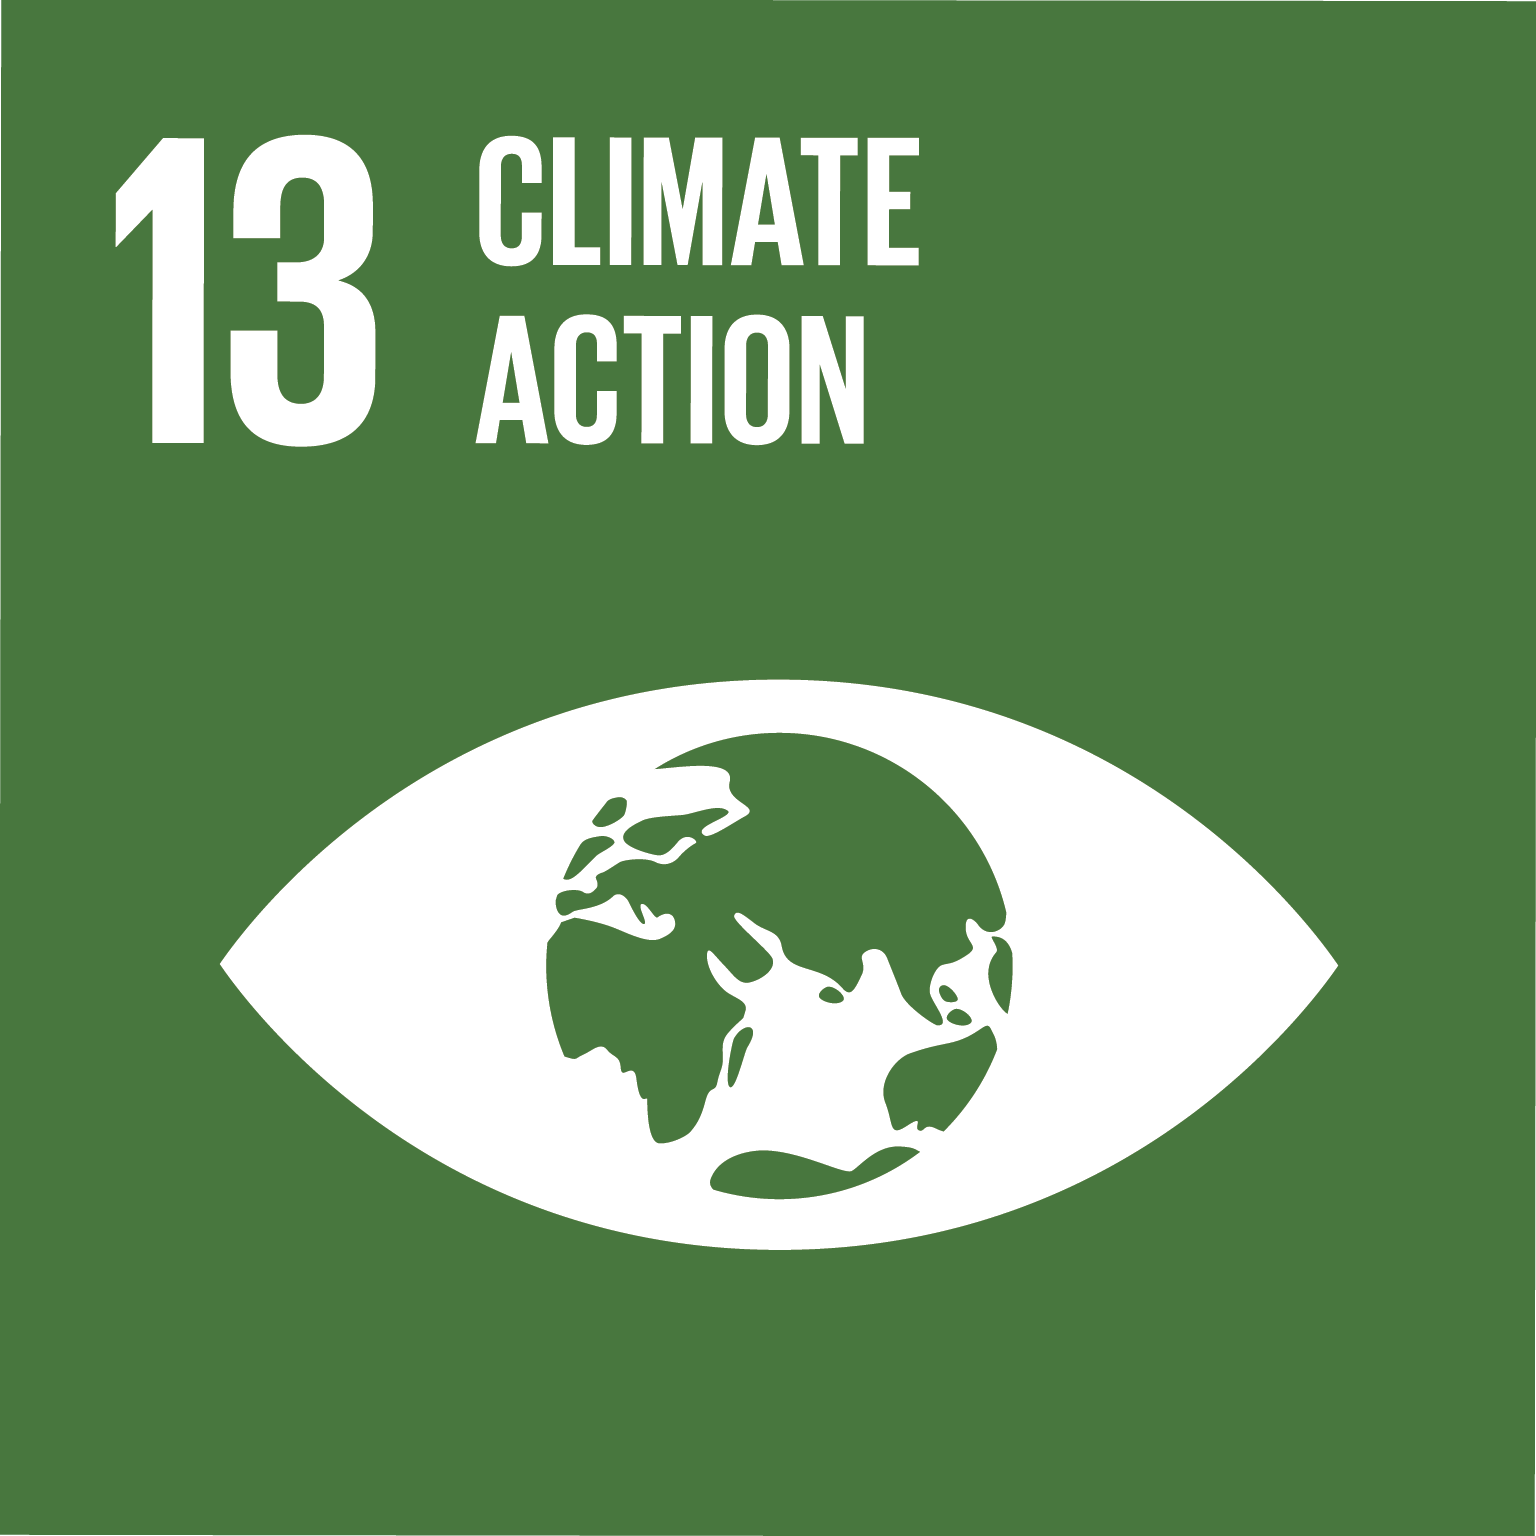 Verdensmål 13: Klimaindsats